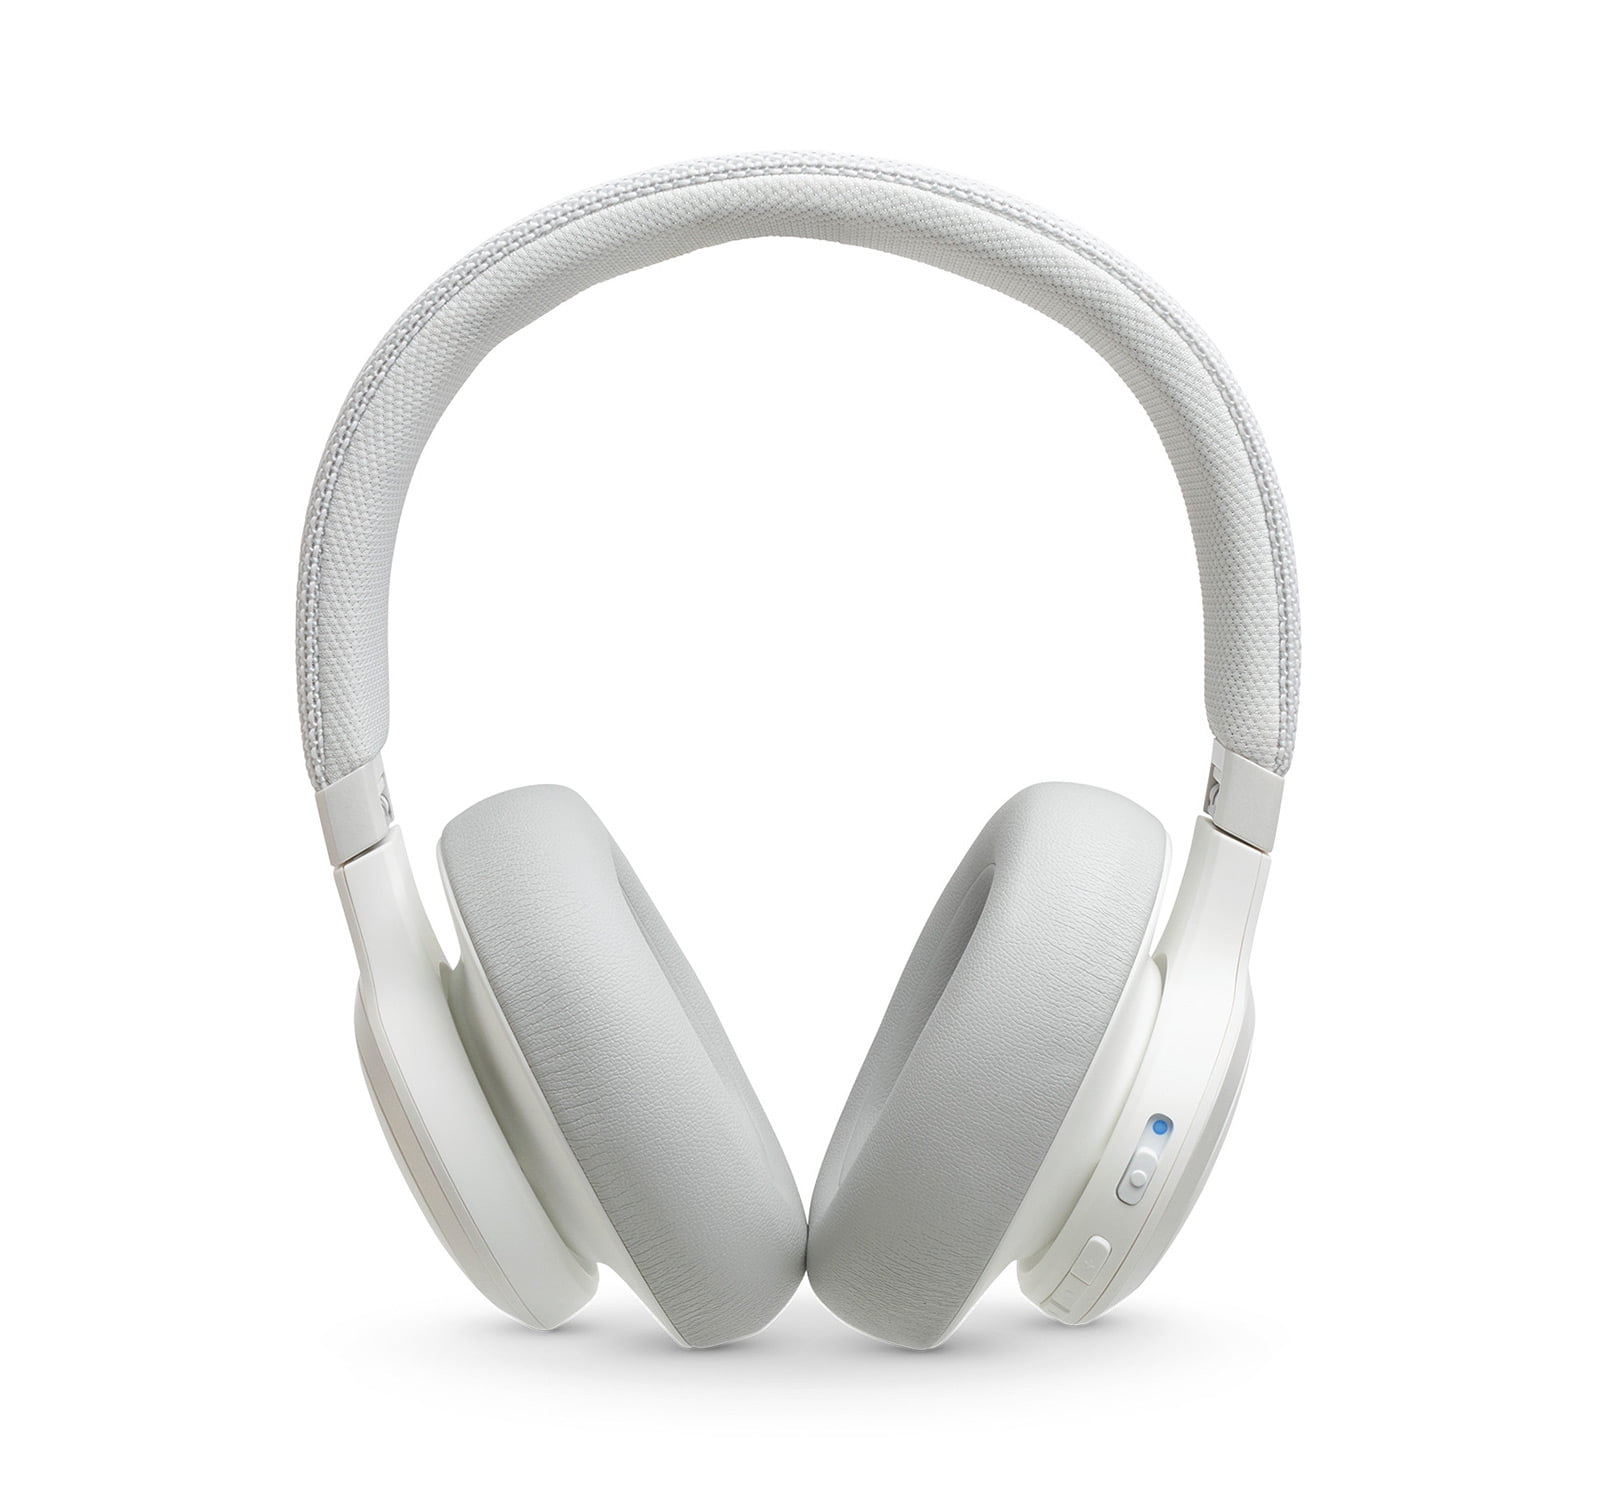 Sui elektropositive intellektuel JBL Live 650BT (Open Box) White Over-Ear Noise Cancelling Headphones -  Walmart.com